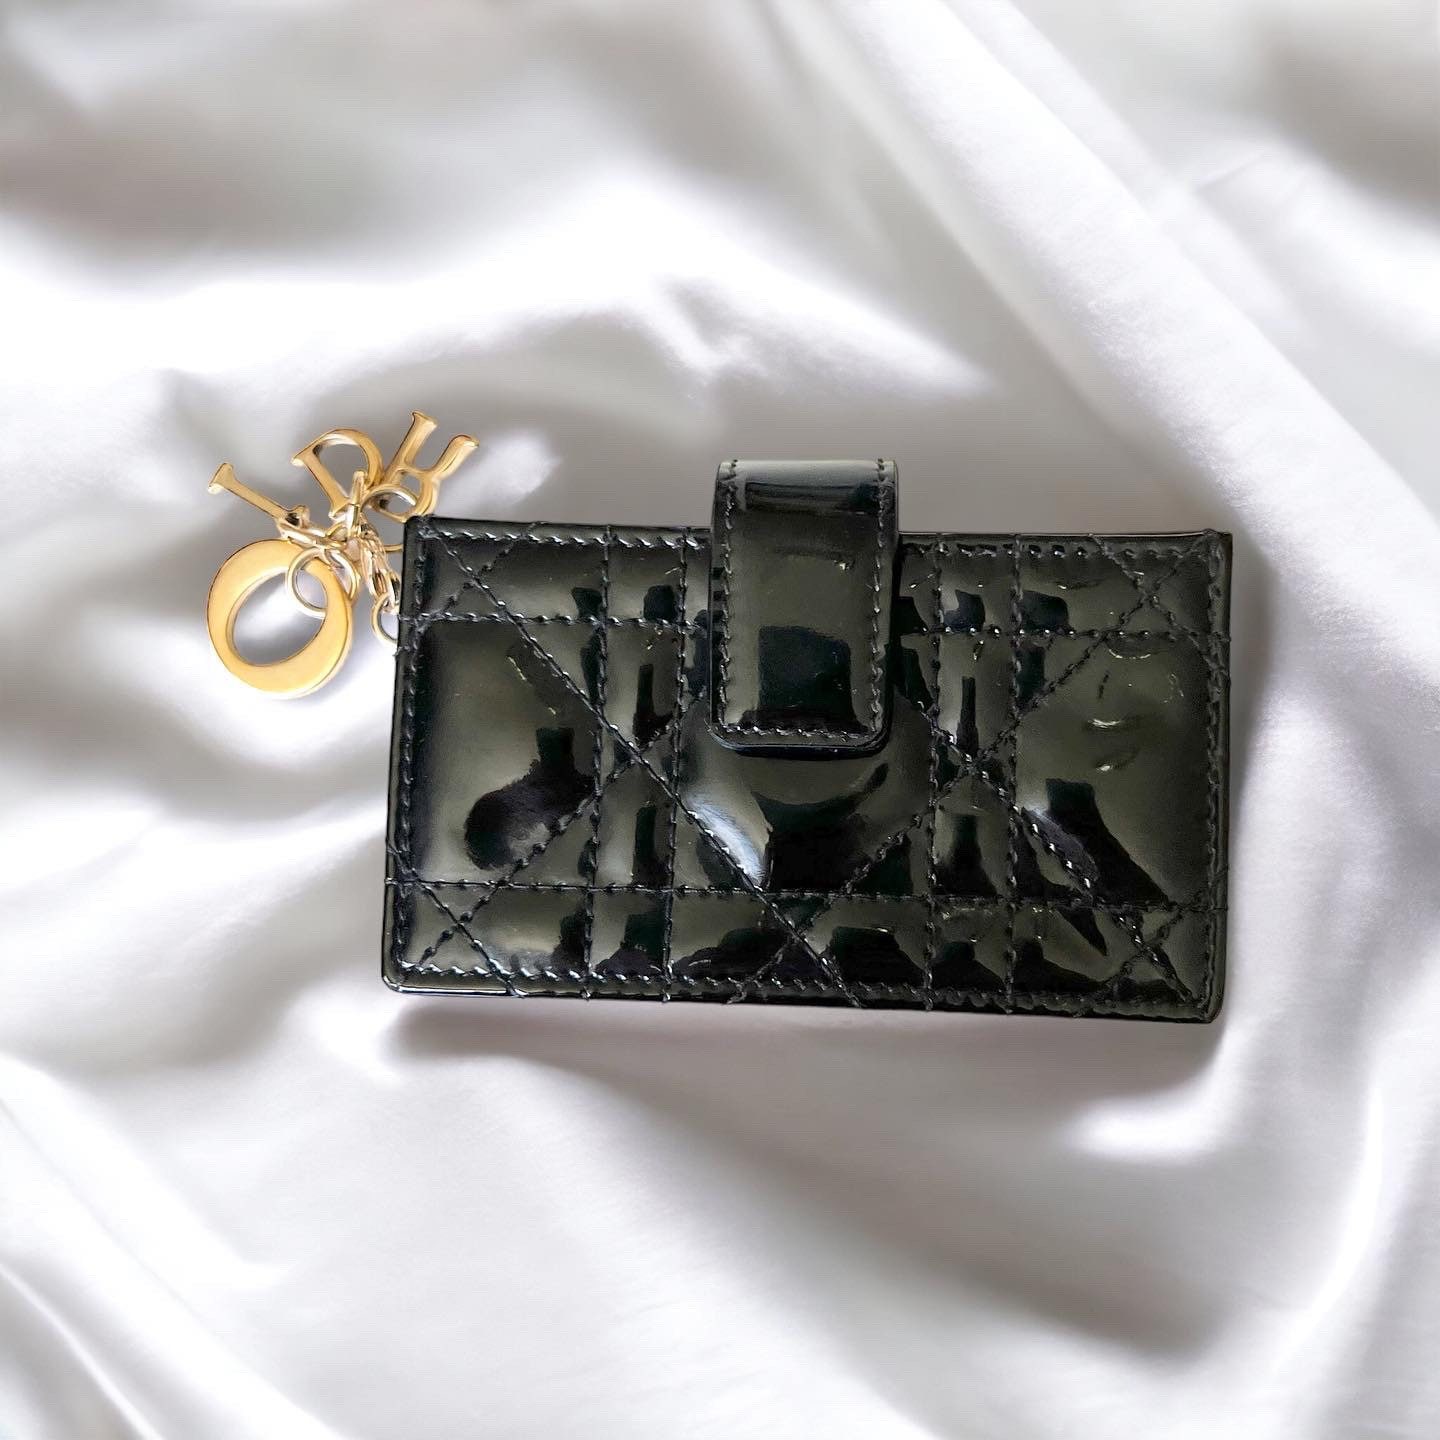 Lady Dior 5-Gusset Card Holder Black Patent Cannage Calfskin